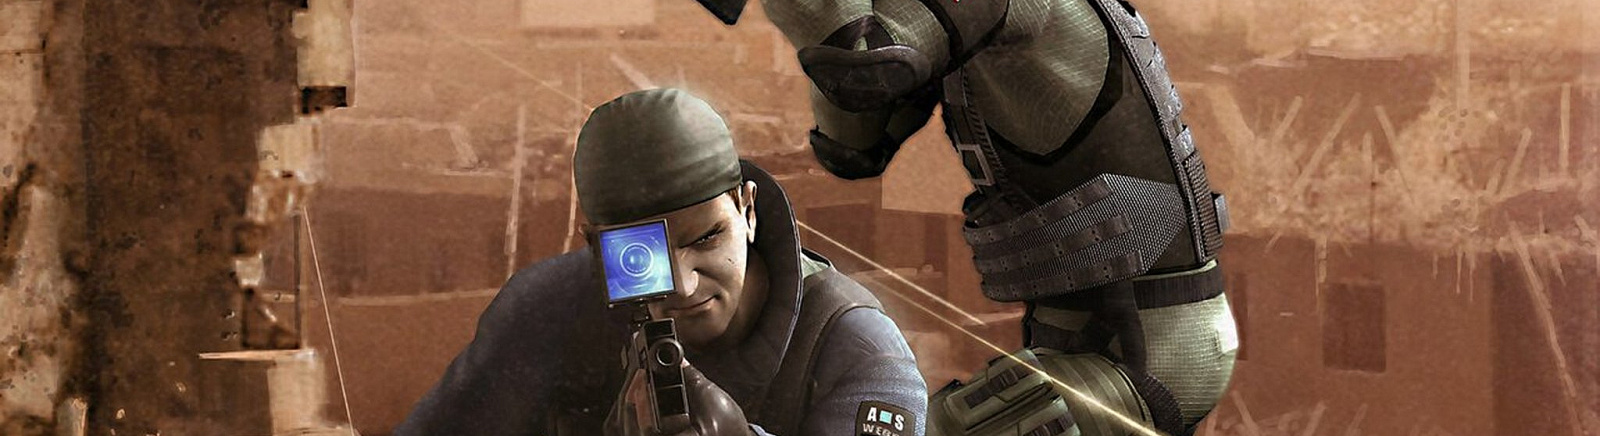 Дата выхода Tom Clancy's Rainbow Six: Lockdown  на PC, PS2 и Xbox в России и во всем мире